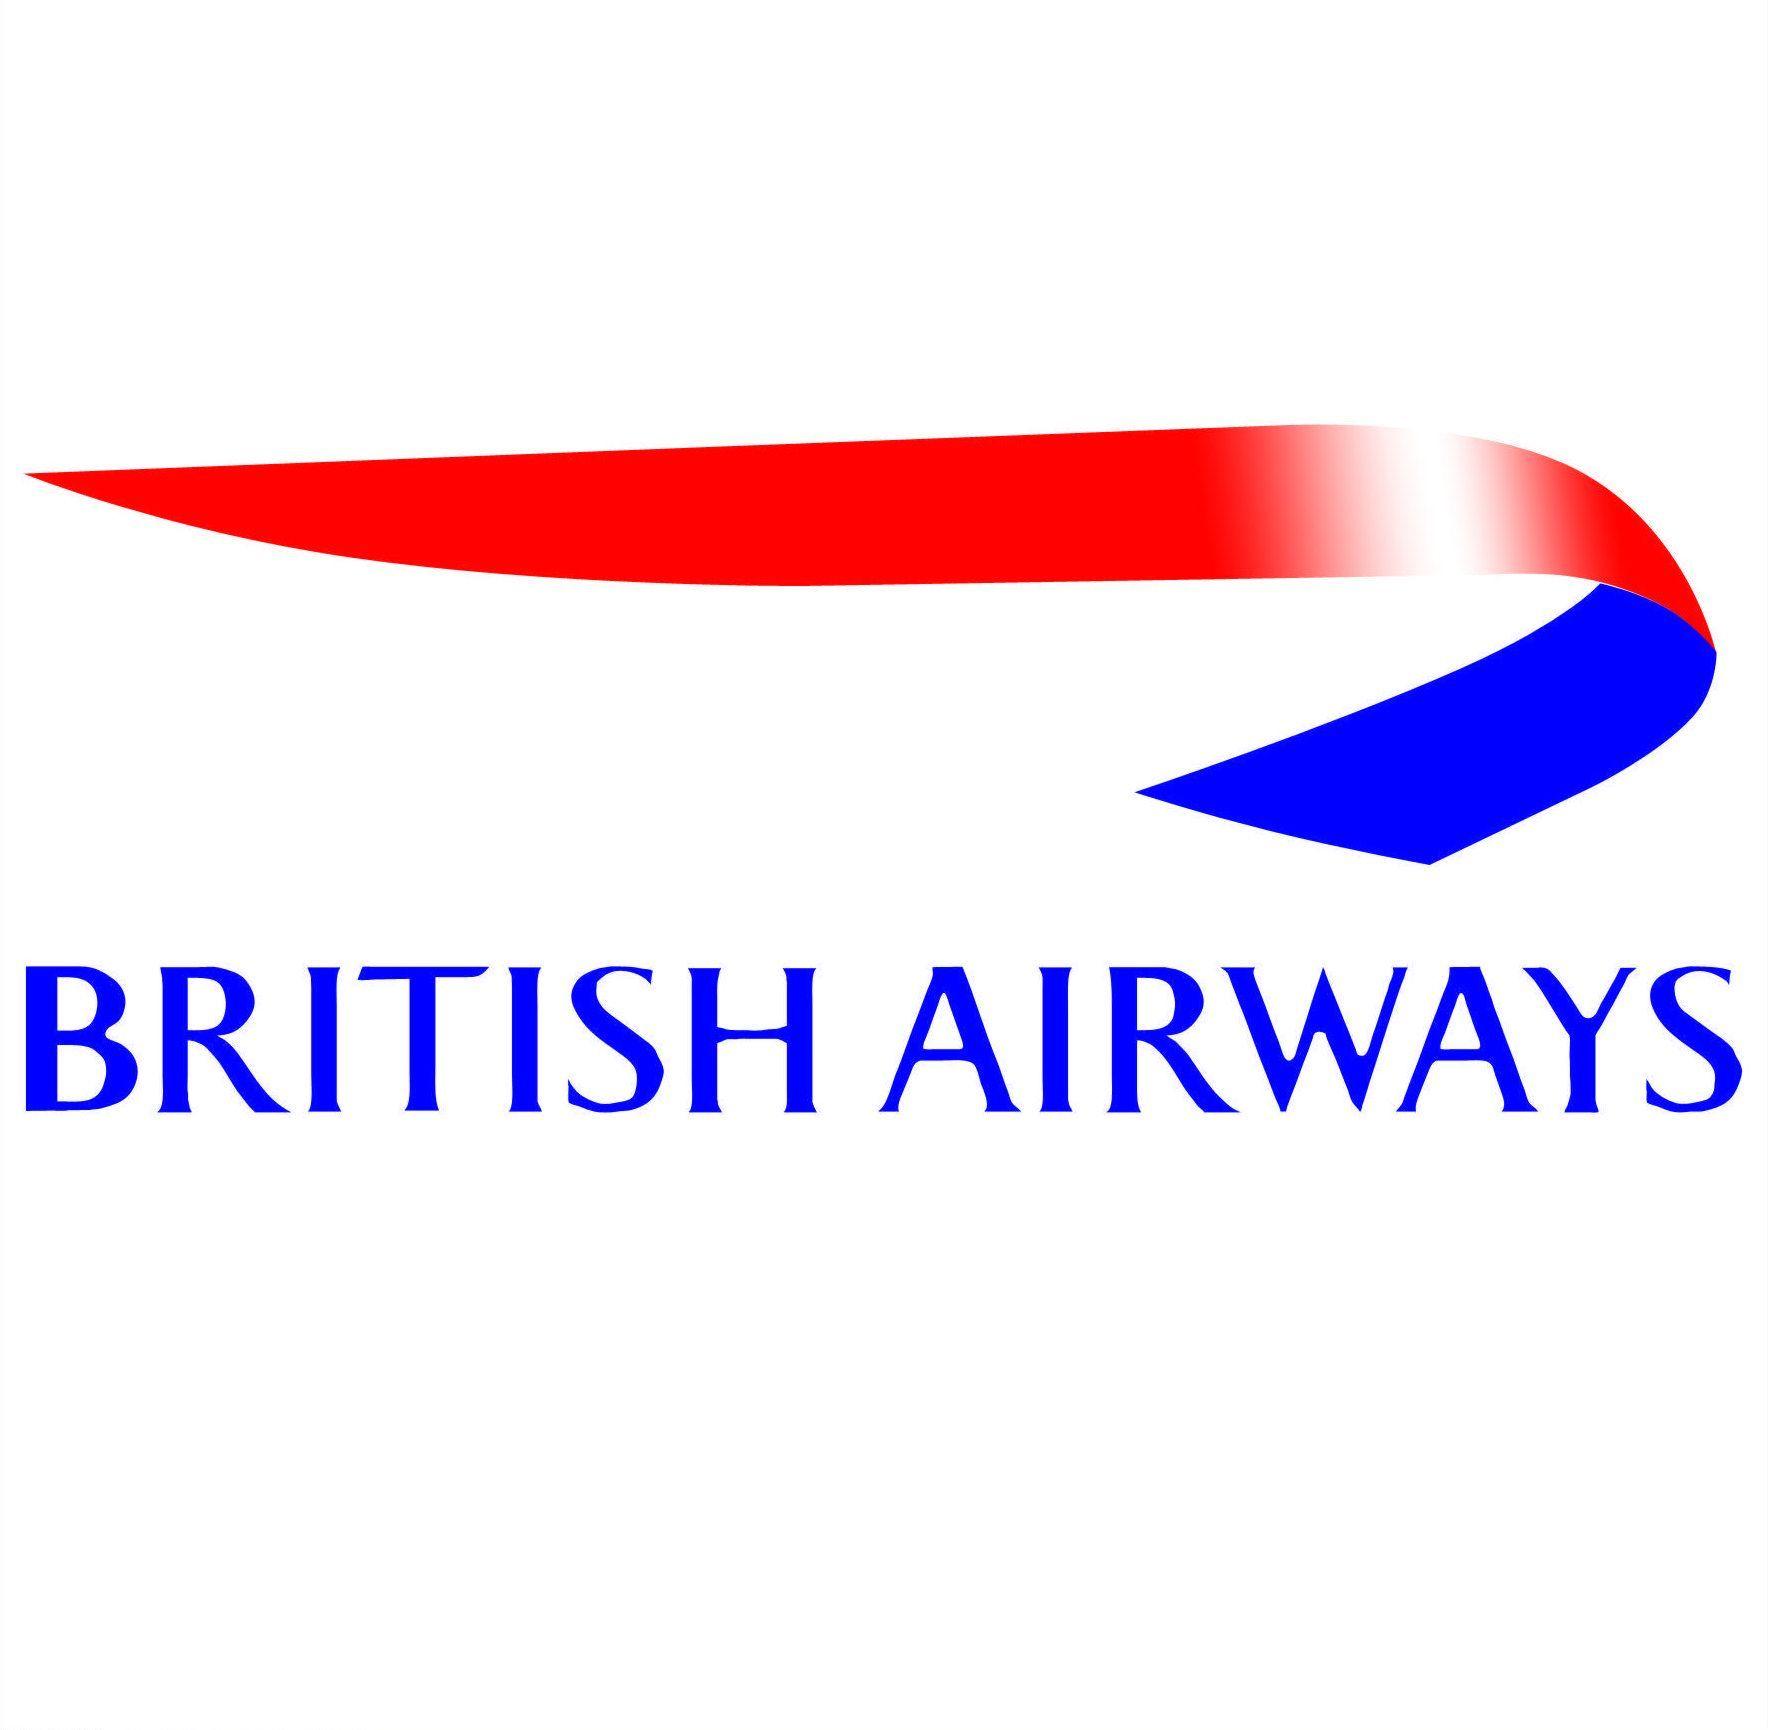 British Airways Logo - Pin by Gustavo Berger on Airline Logos | British airways, Airline ...